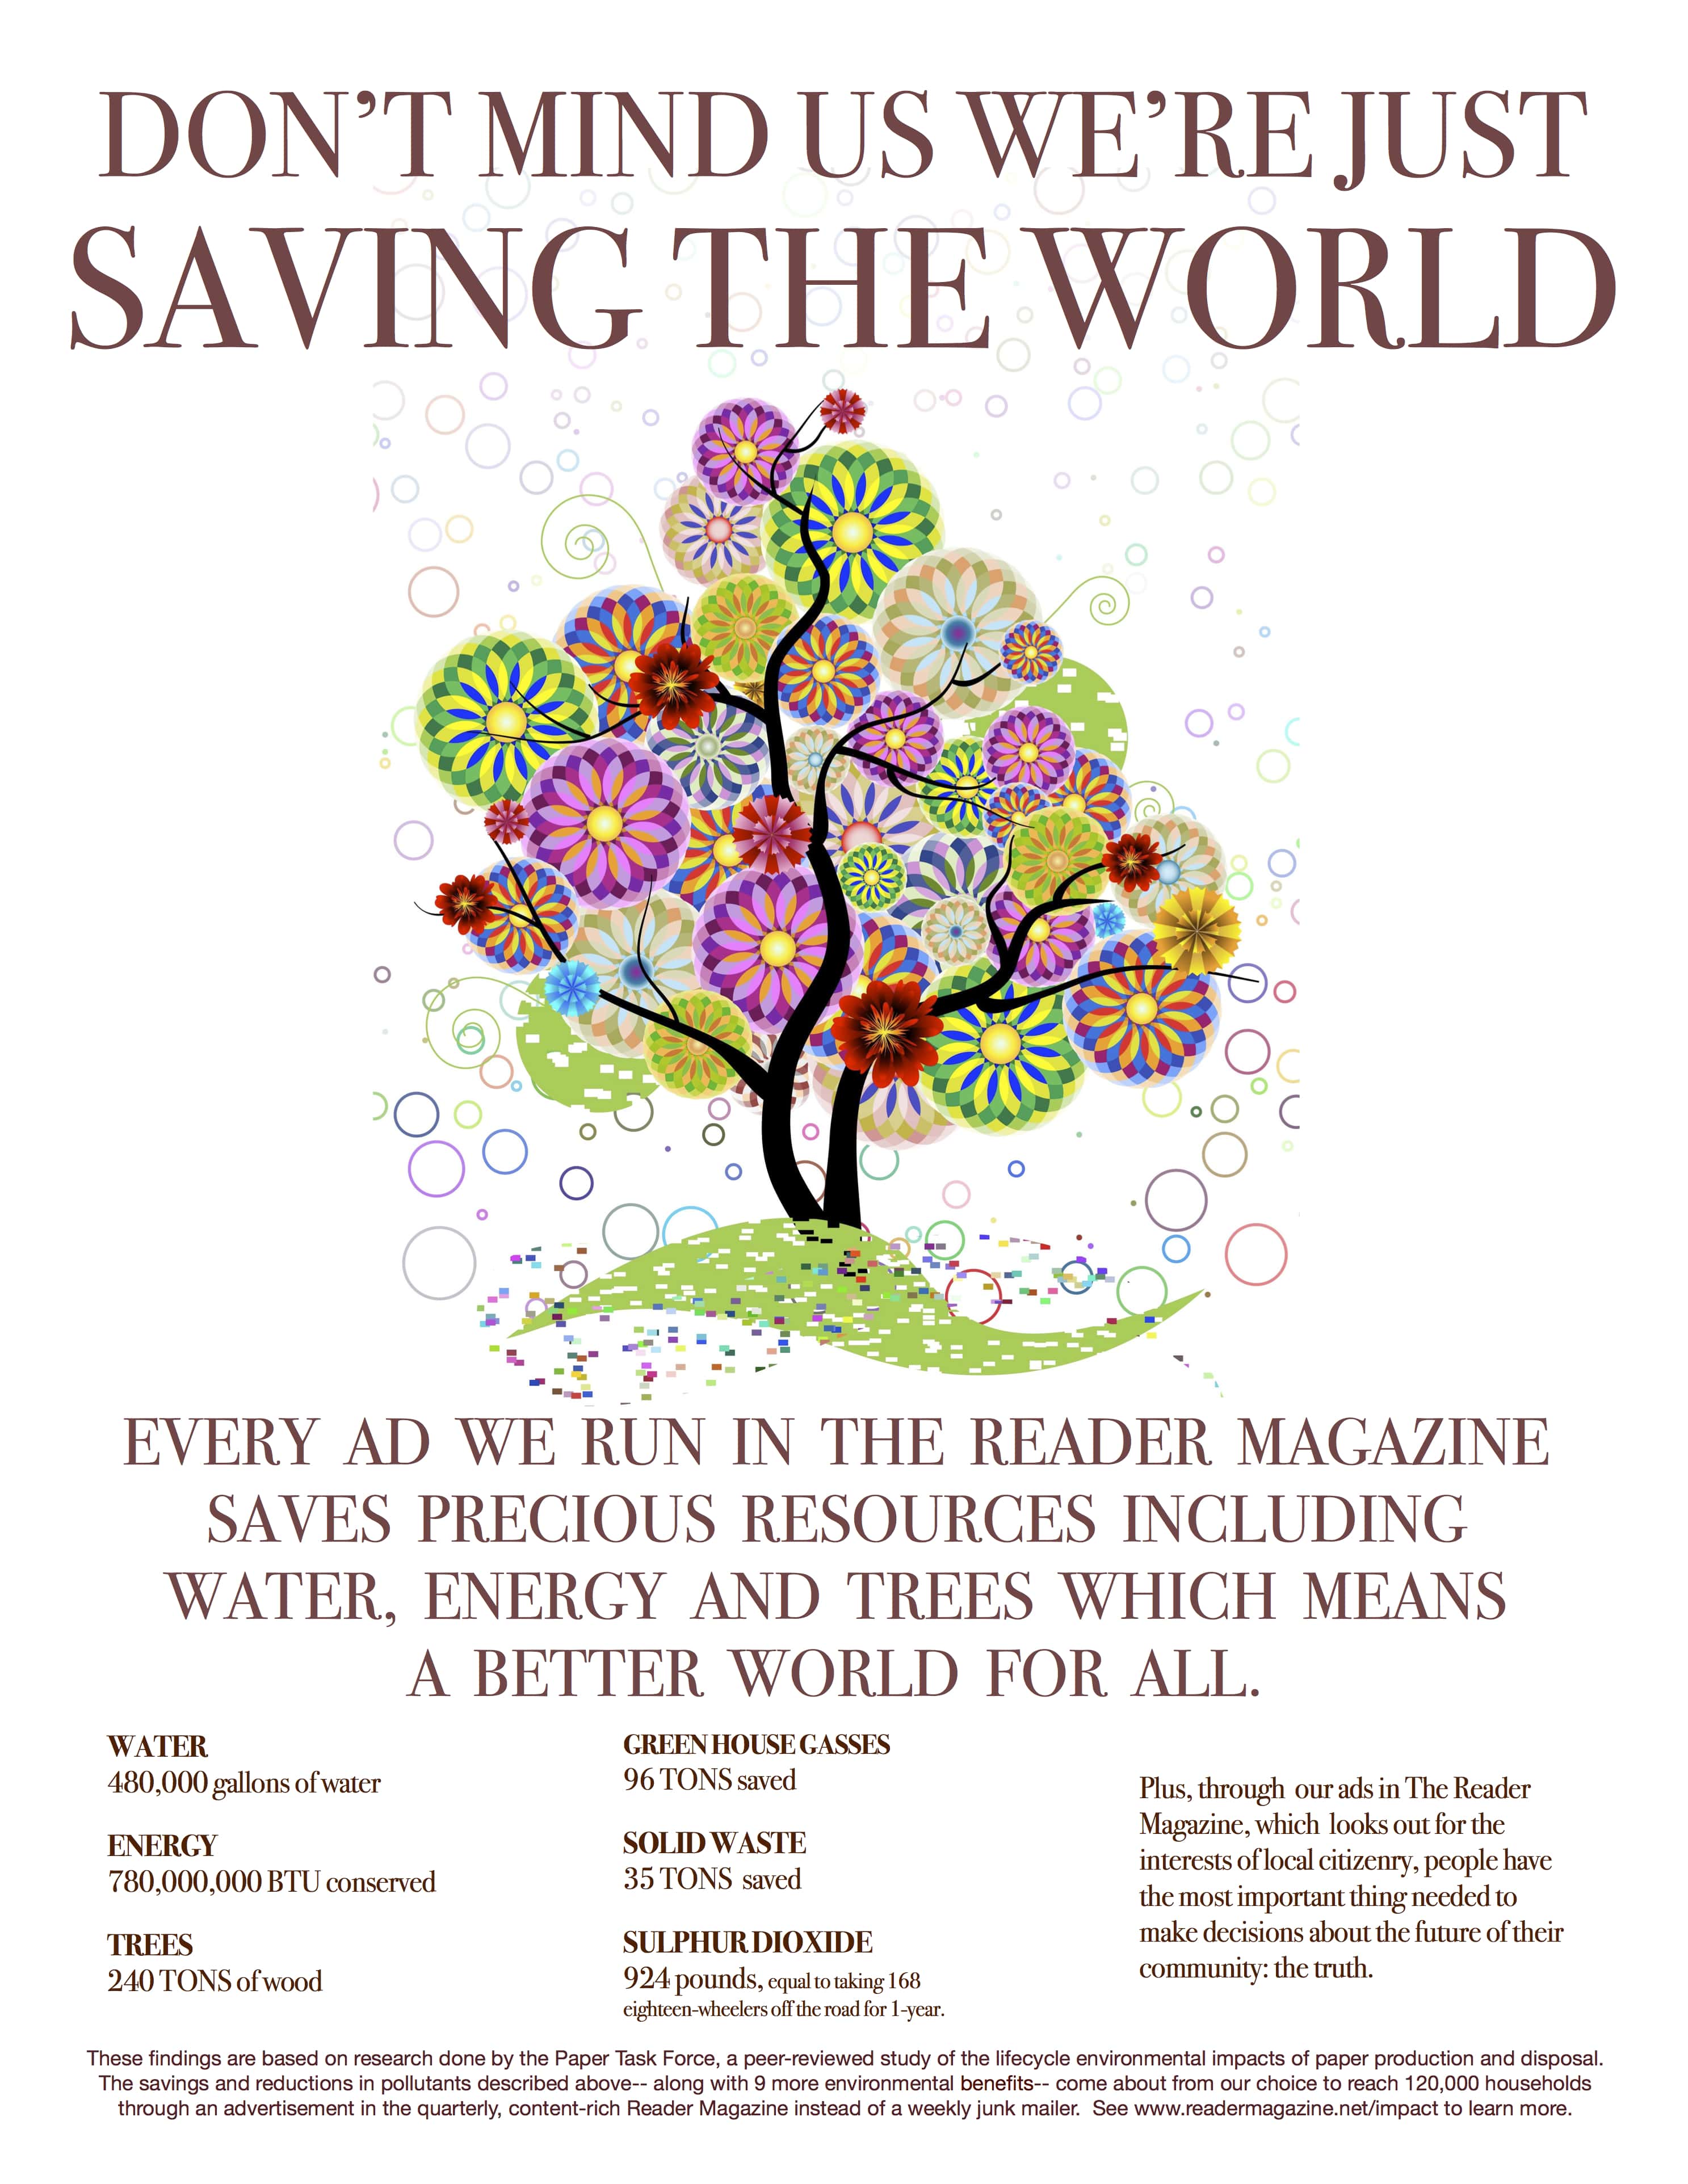 Poster Showing Environmental Impact of Using Reader Magazine